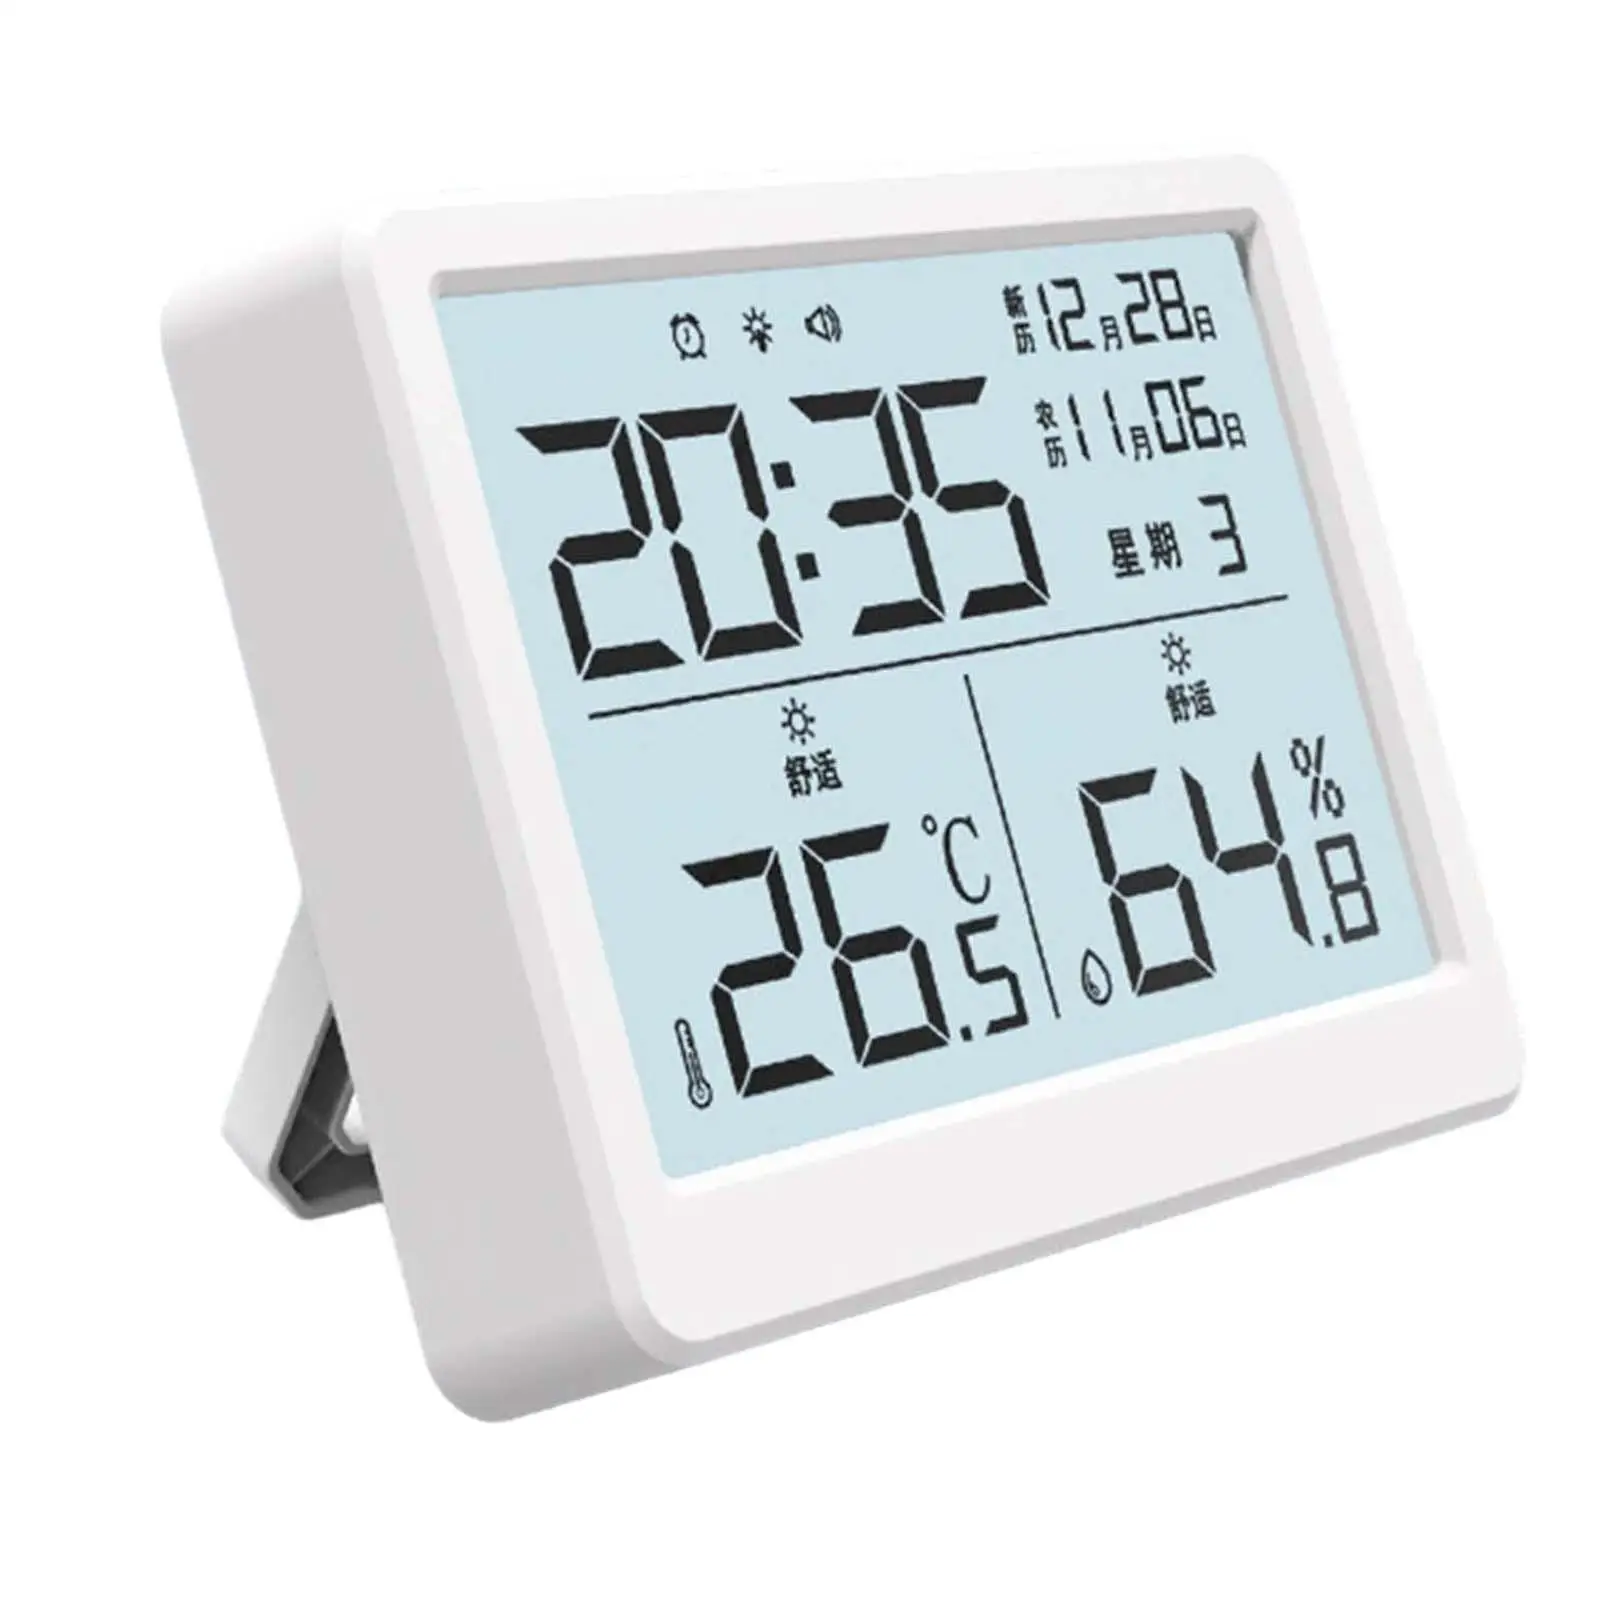 

Room Thermometer Digital Alarm Clock Calendar Wall Clock with LCD Display Humidity Monitor Desk Clocks for Warehouse Bedroom